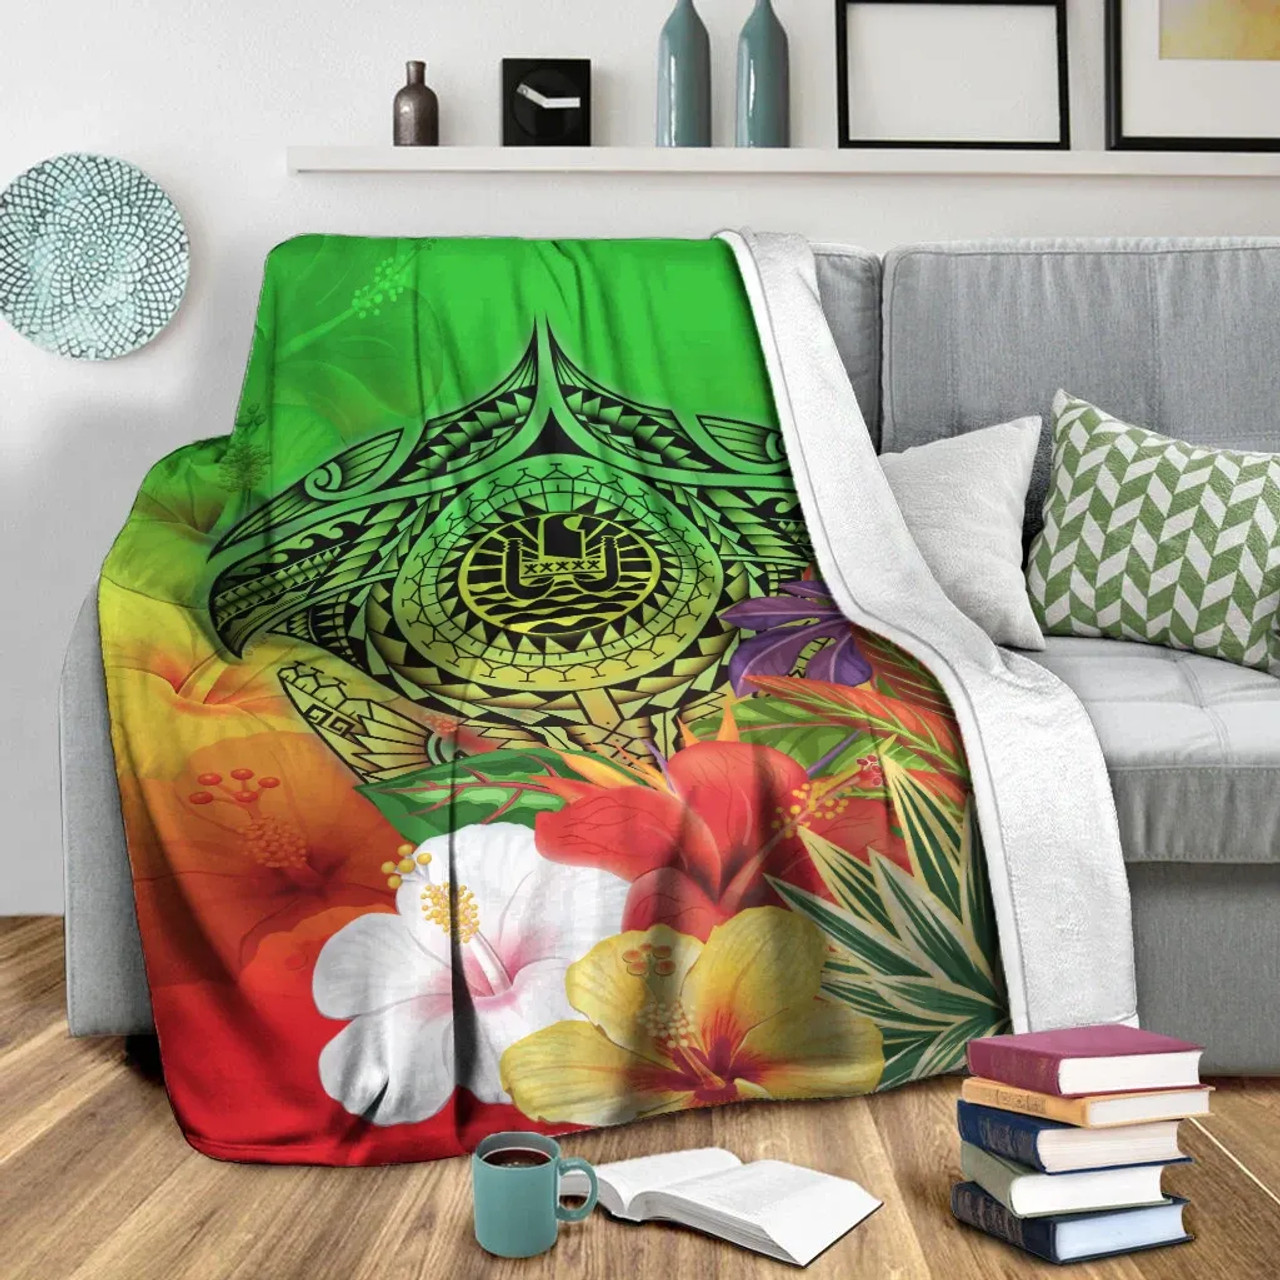 Tahiti Premium Blanket - Manta Ray Tropical Flowers (Green) 1